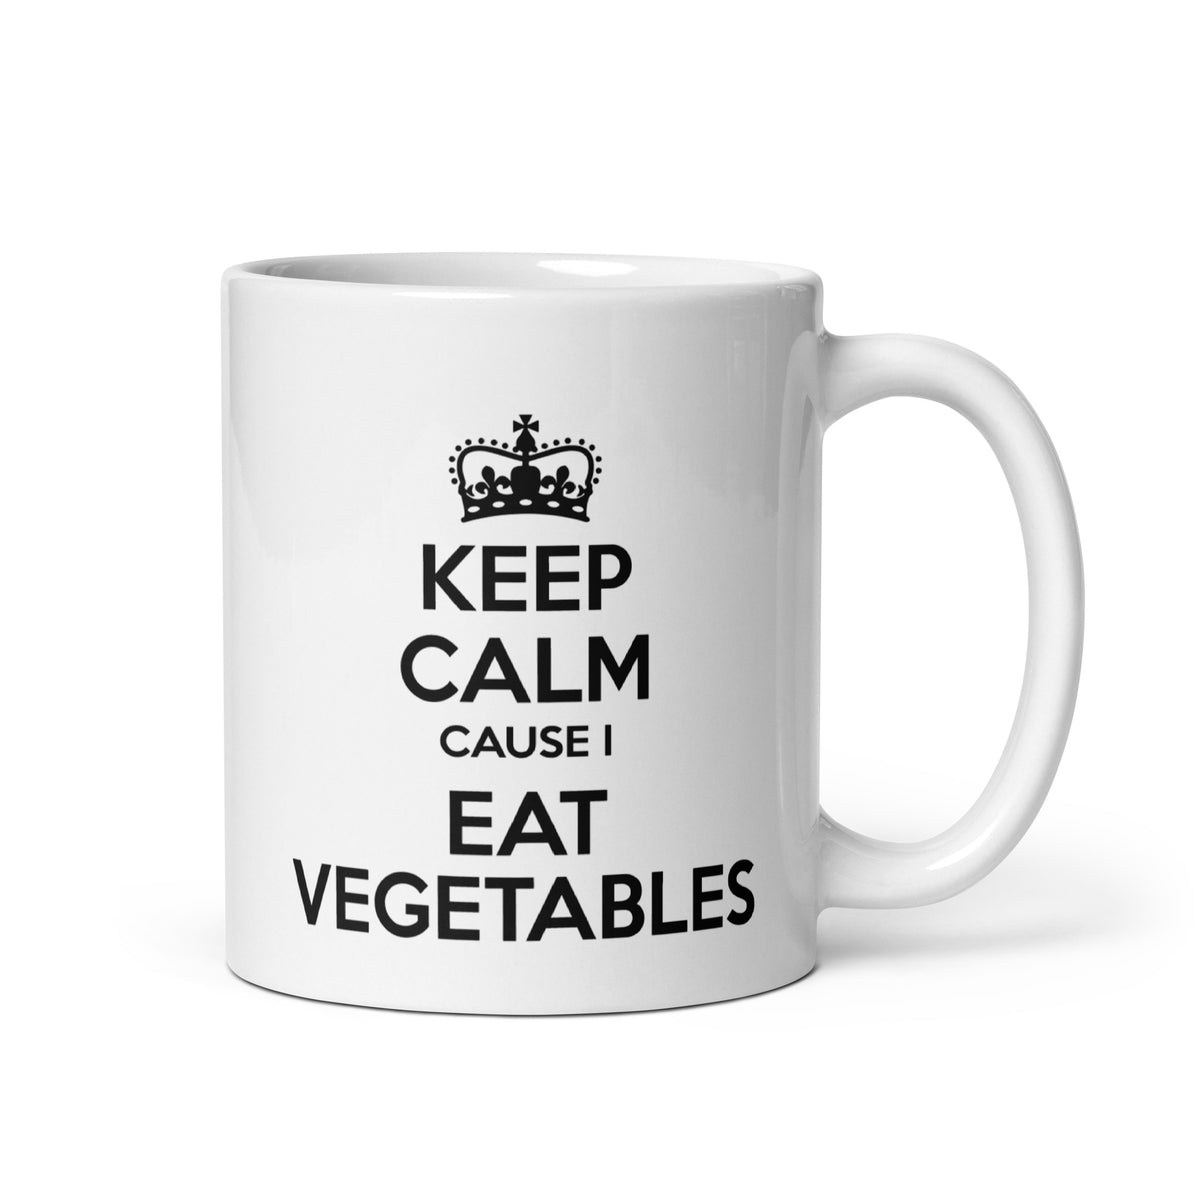 KEEP CALM EAT VEGETABLES White glossy mug